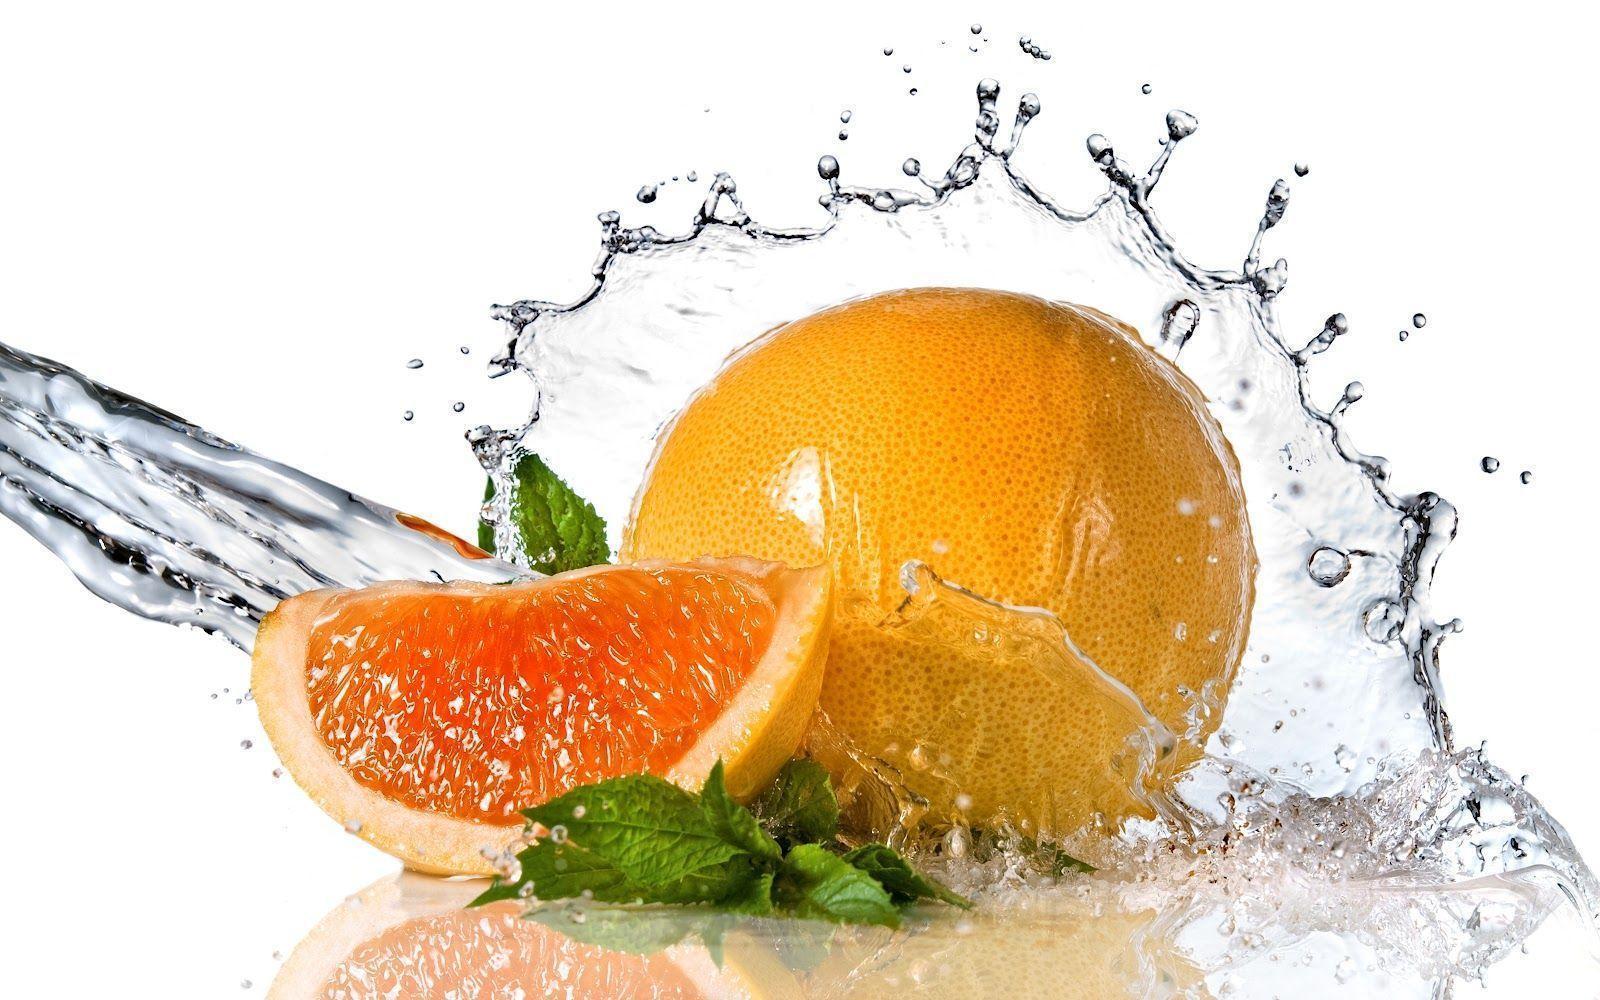 Orange fruit wallpaper for web page background